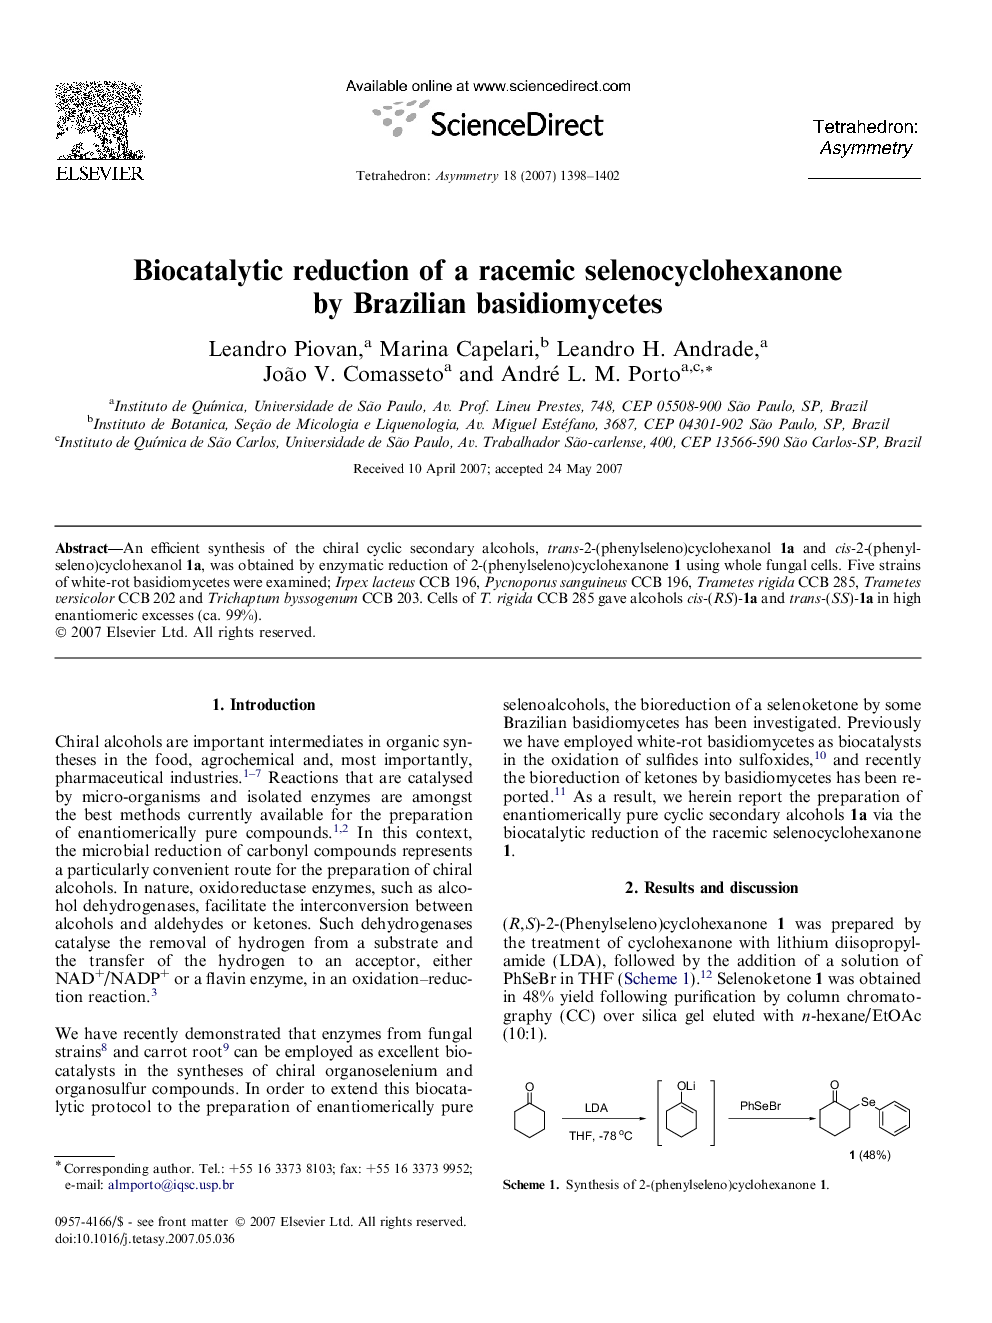 Biocatalytic reduction of a racemic selenocyclohexanone by Brazilian basidiomycetes